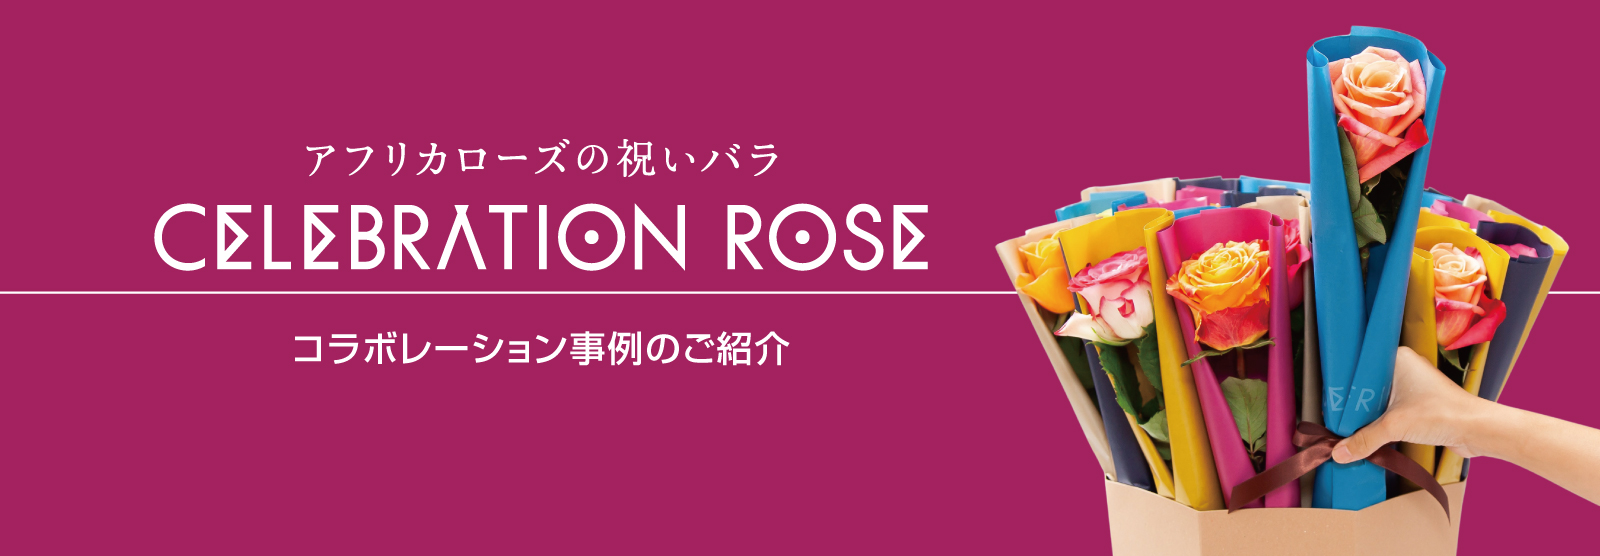 「CELEBRATION ROSE」コラボレーション事例のご紹介